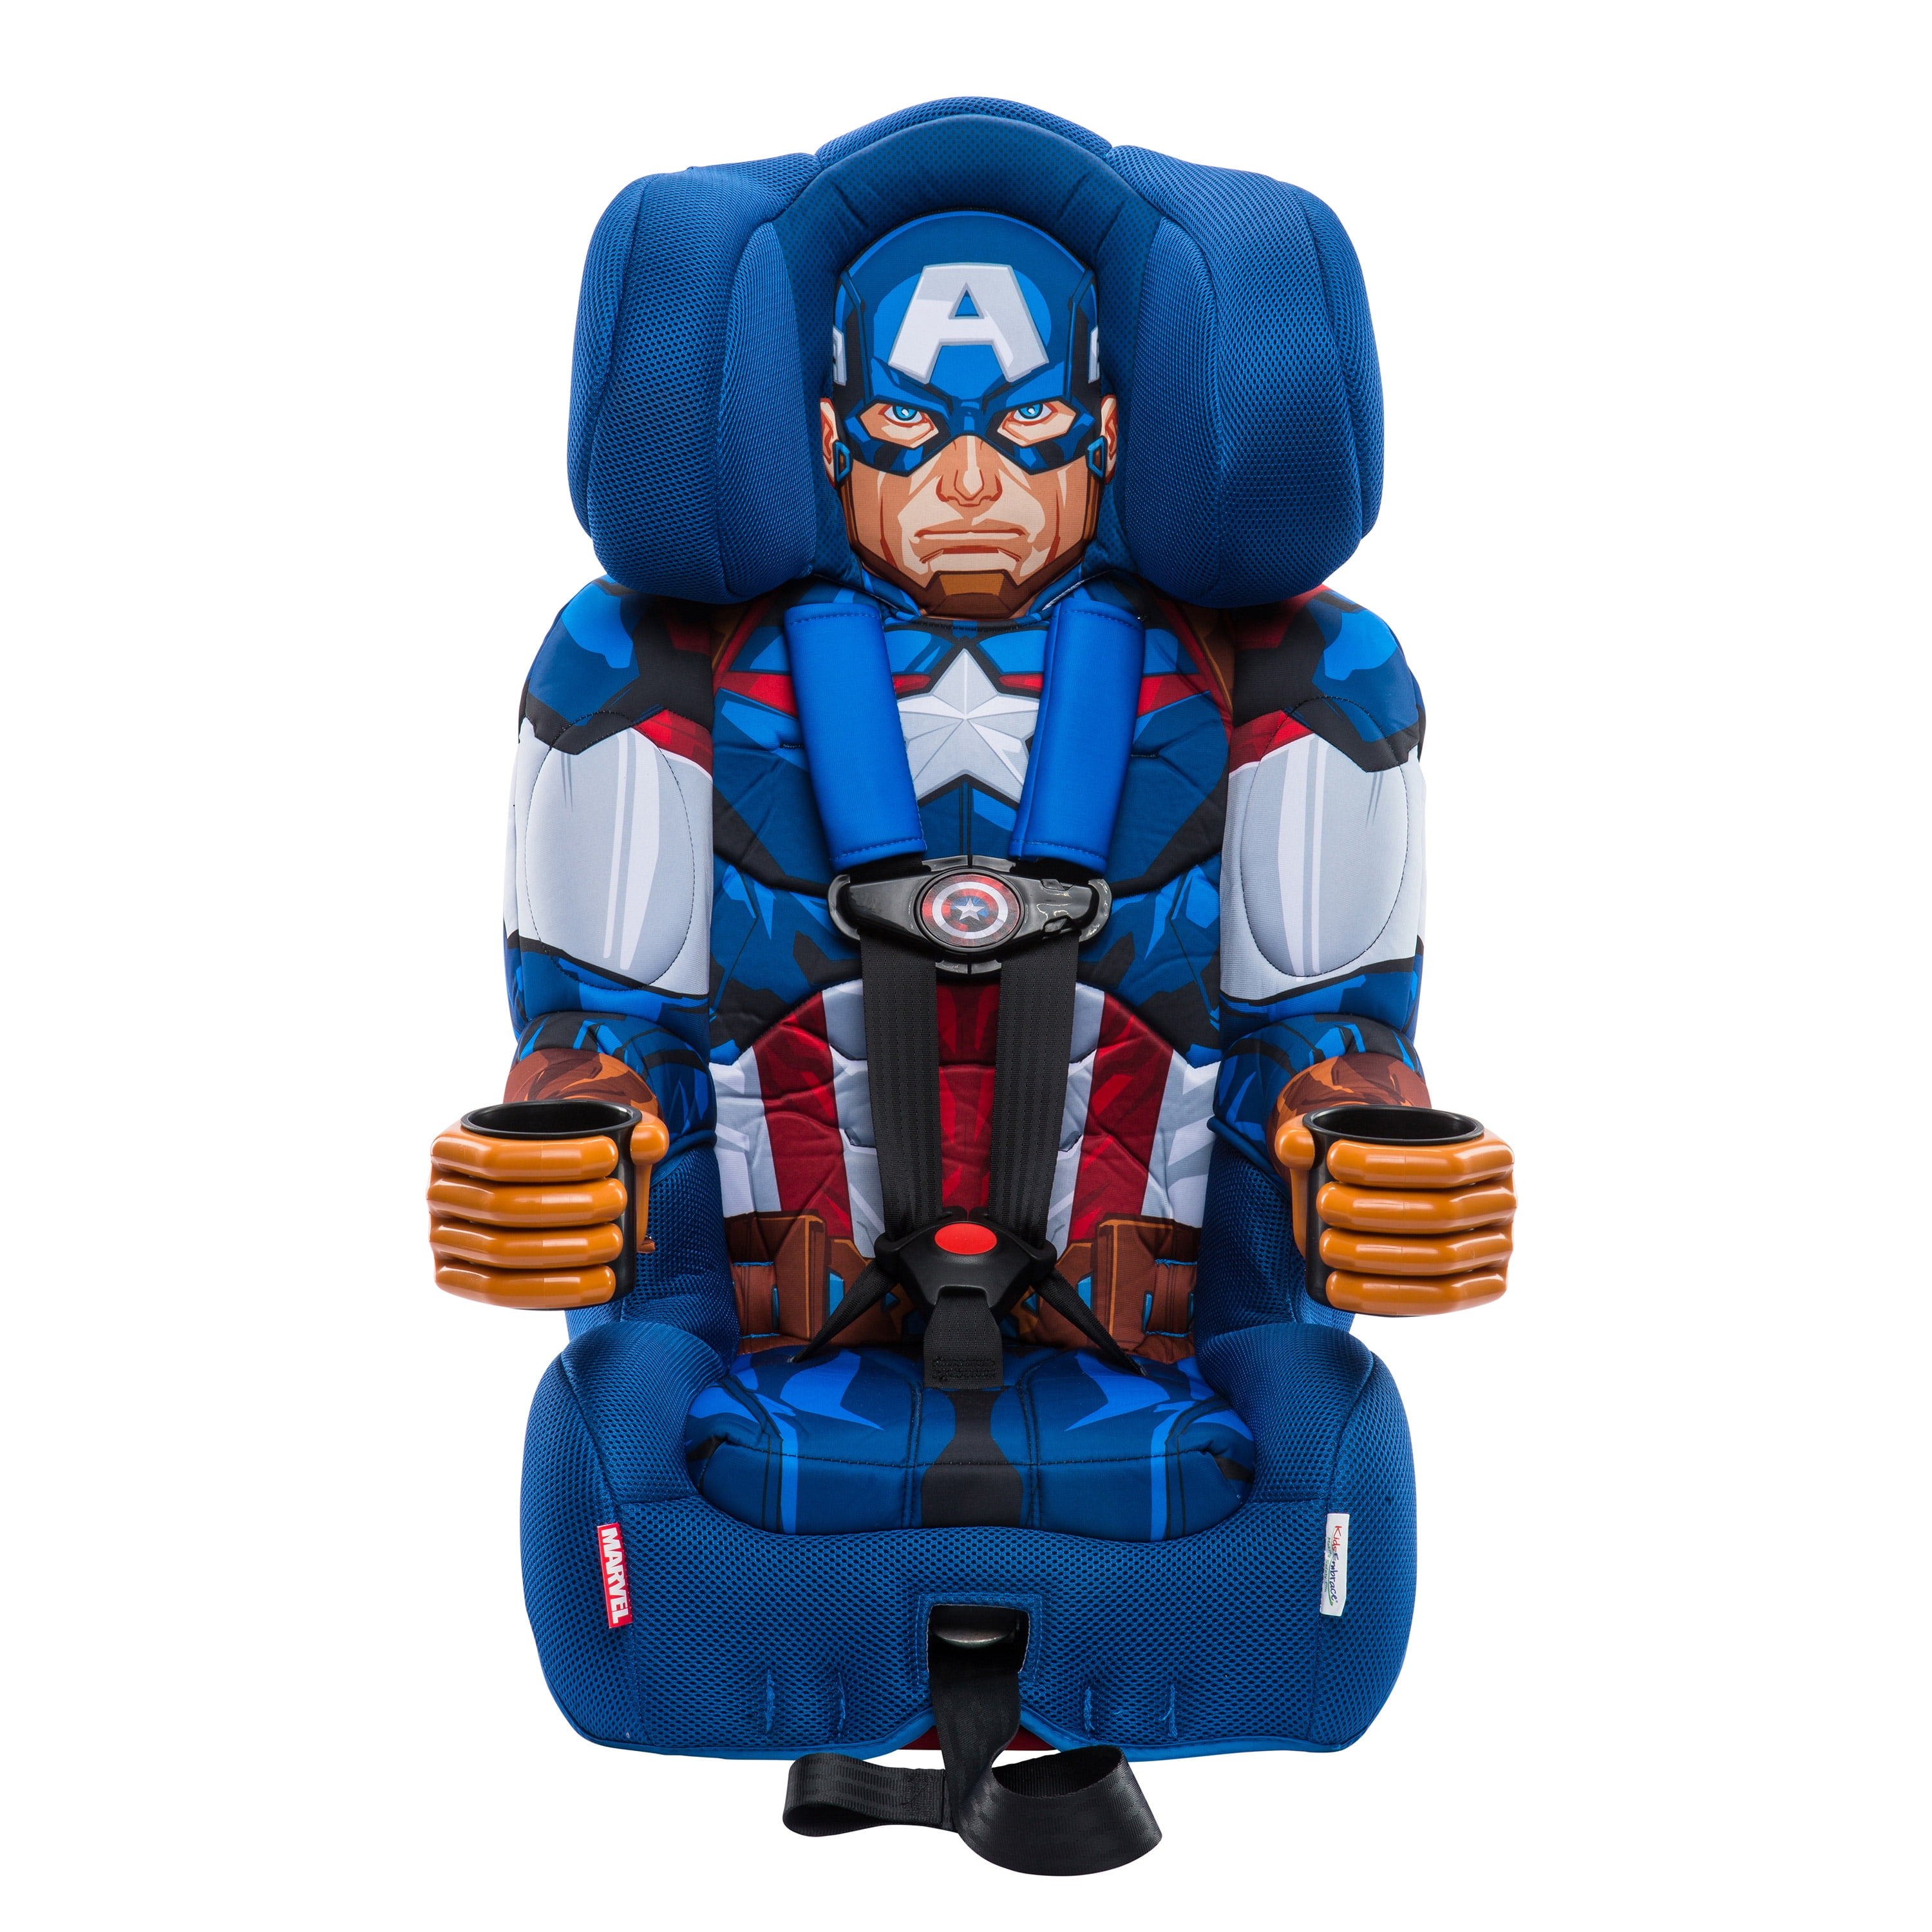 KidsEmbrace Combination Booster Car Seat, Marvel Avengers